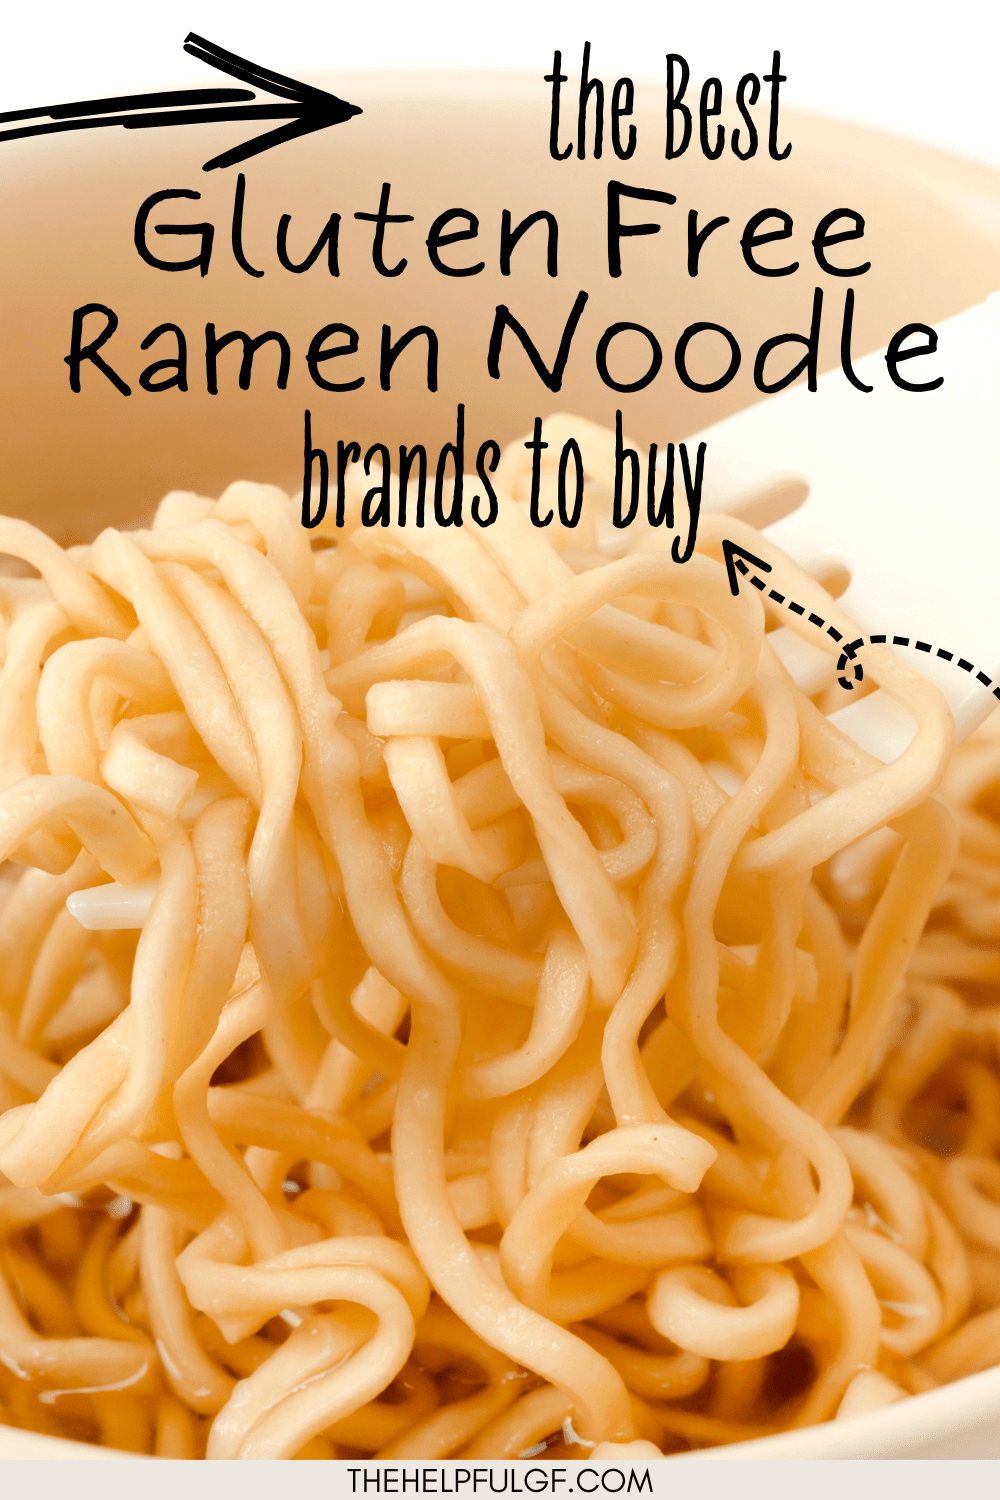 The Best Gluten Free Ramen Noodles Brands to Buy! The Helpful GF